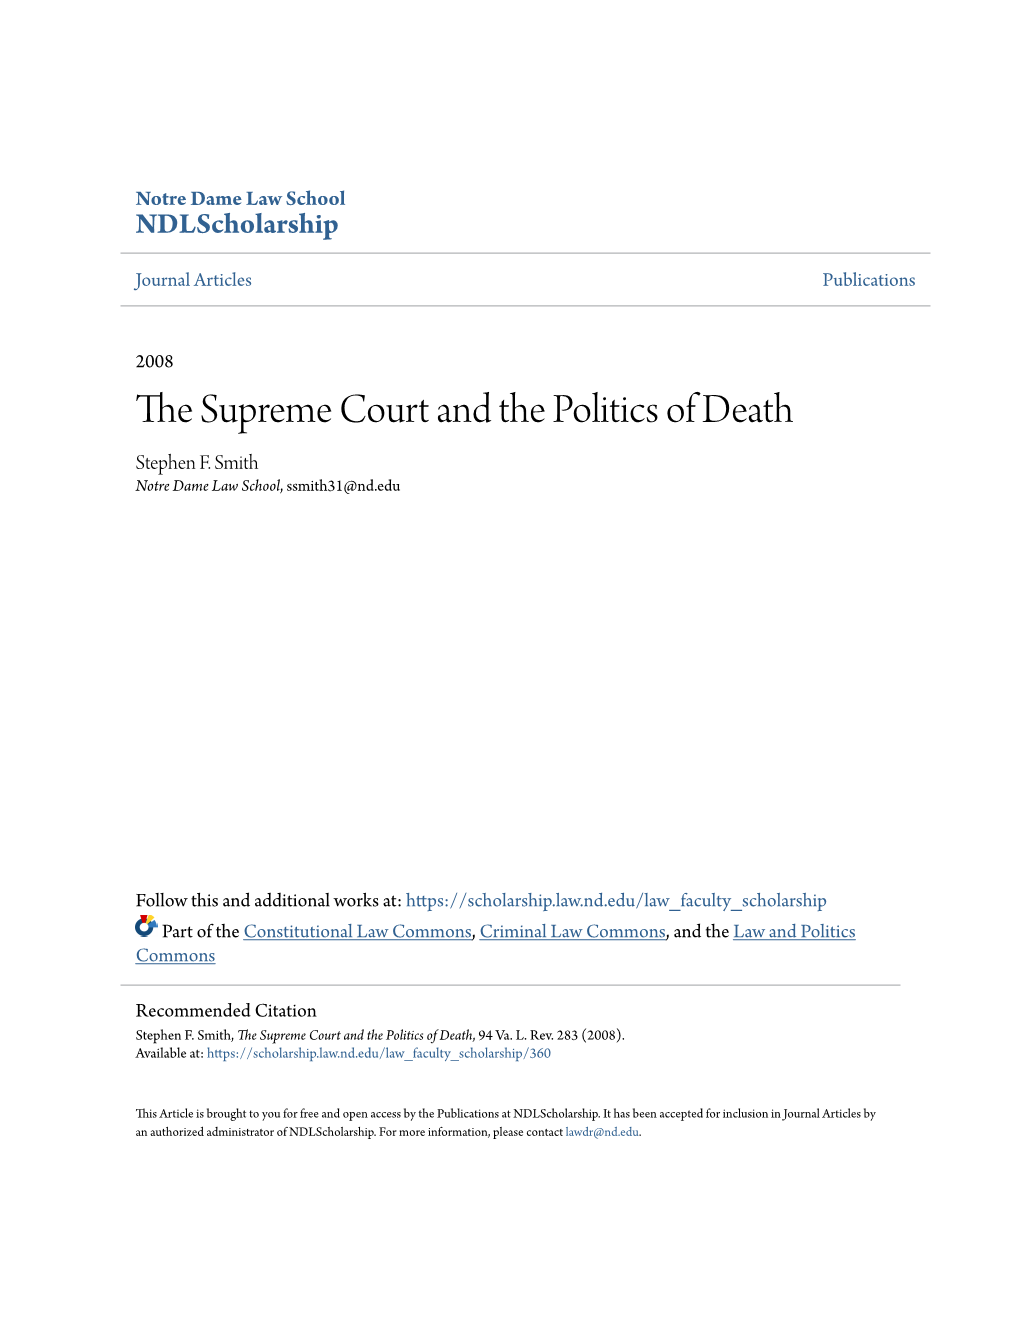 The Supreme Court and the Politics of Death, 94 Va